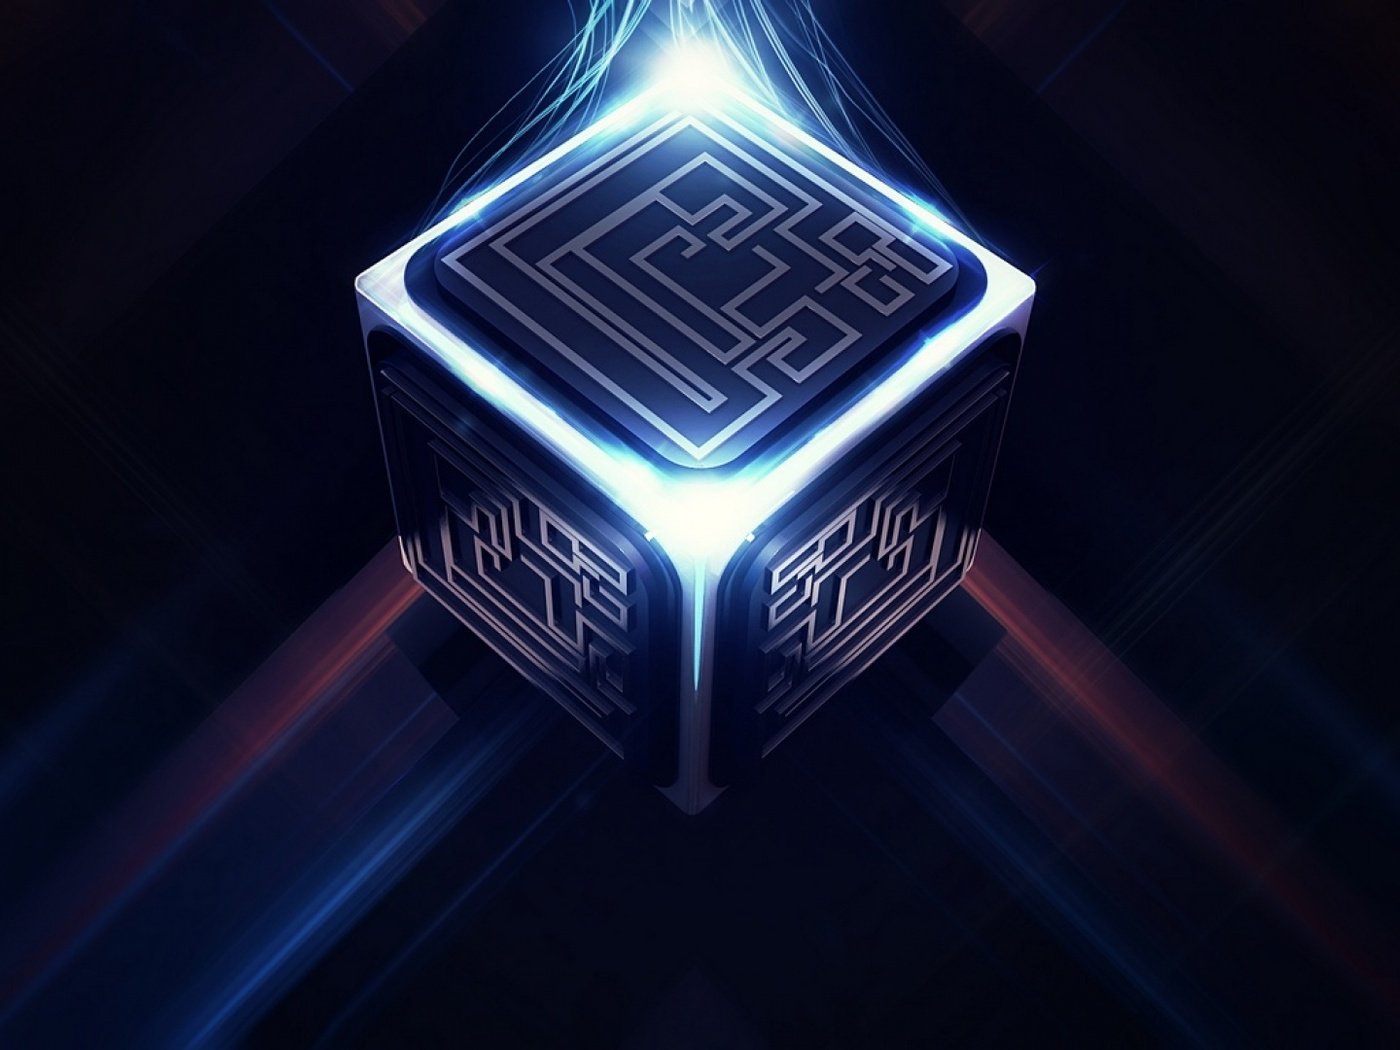 Обои лабиринт на гранях куба, the labyrinth on the faces of the cube разрешение 1920x1080 Загрузить